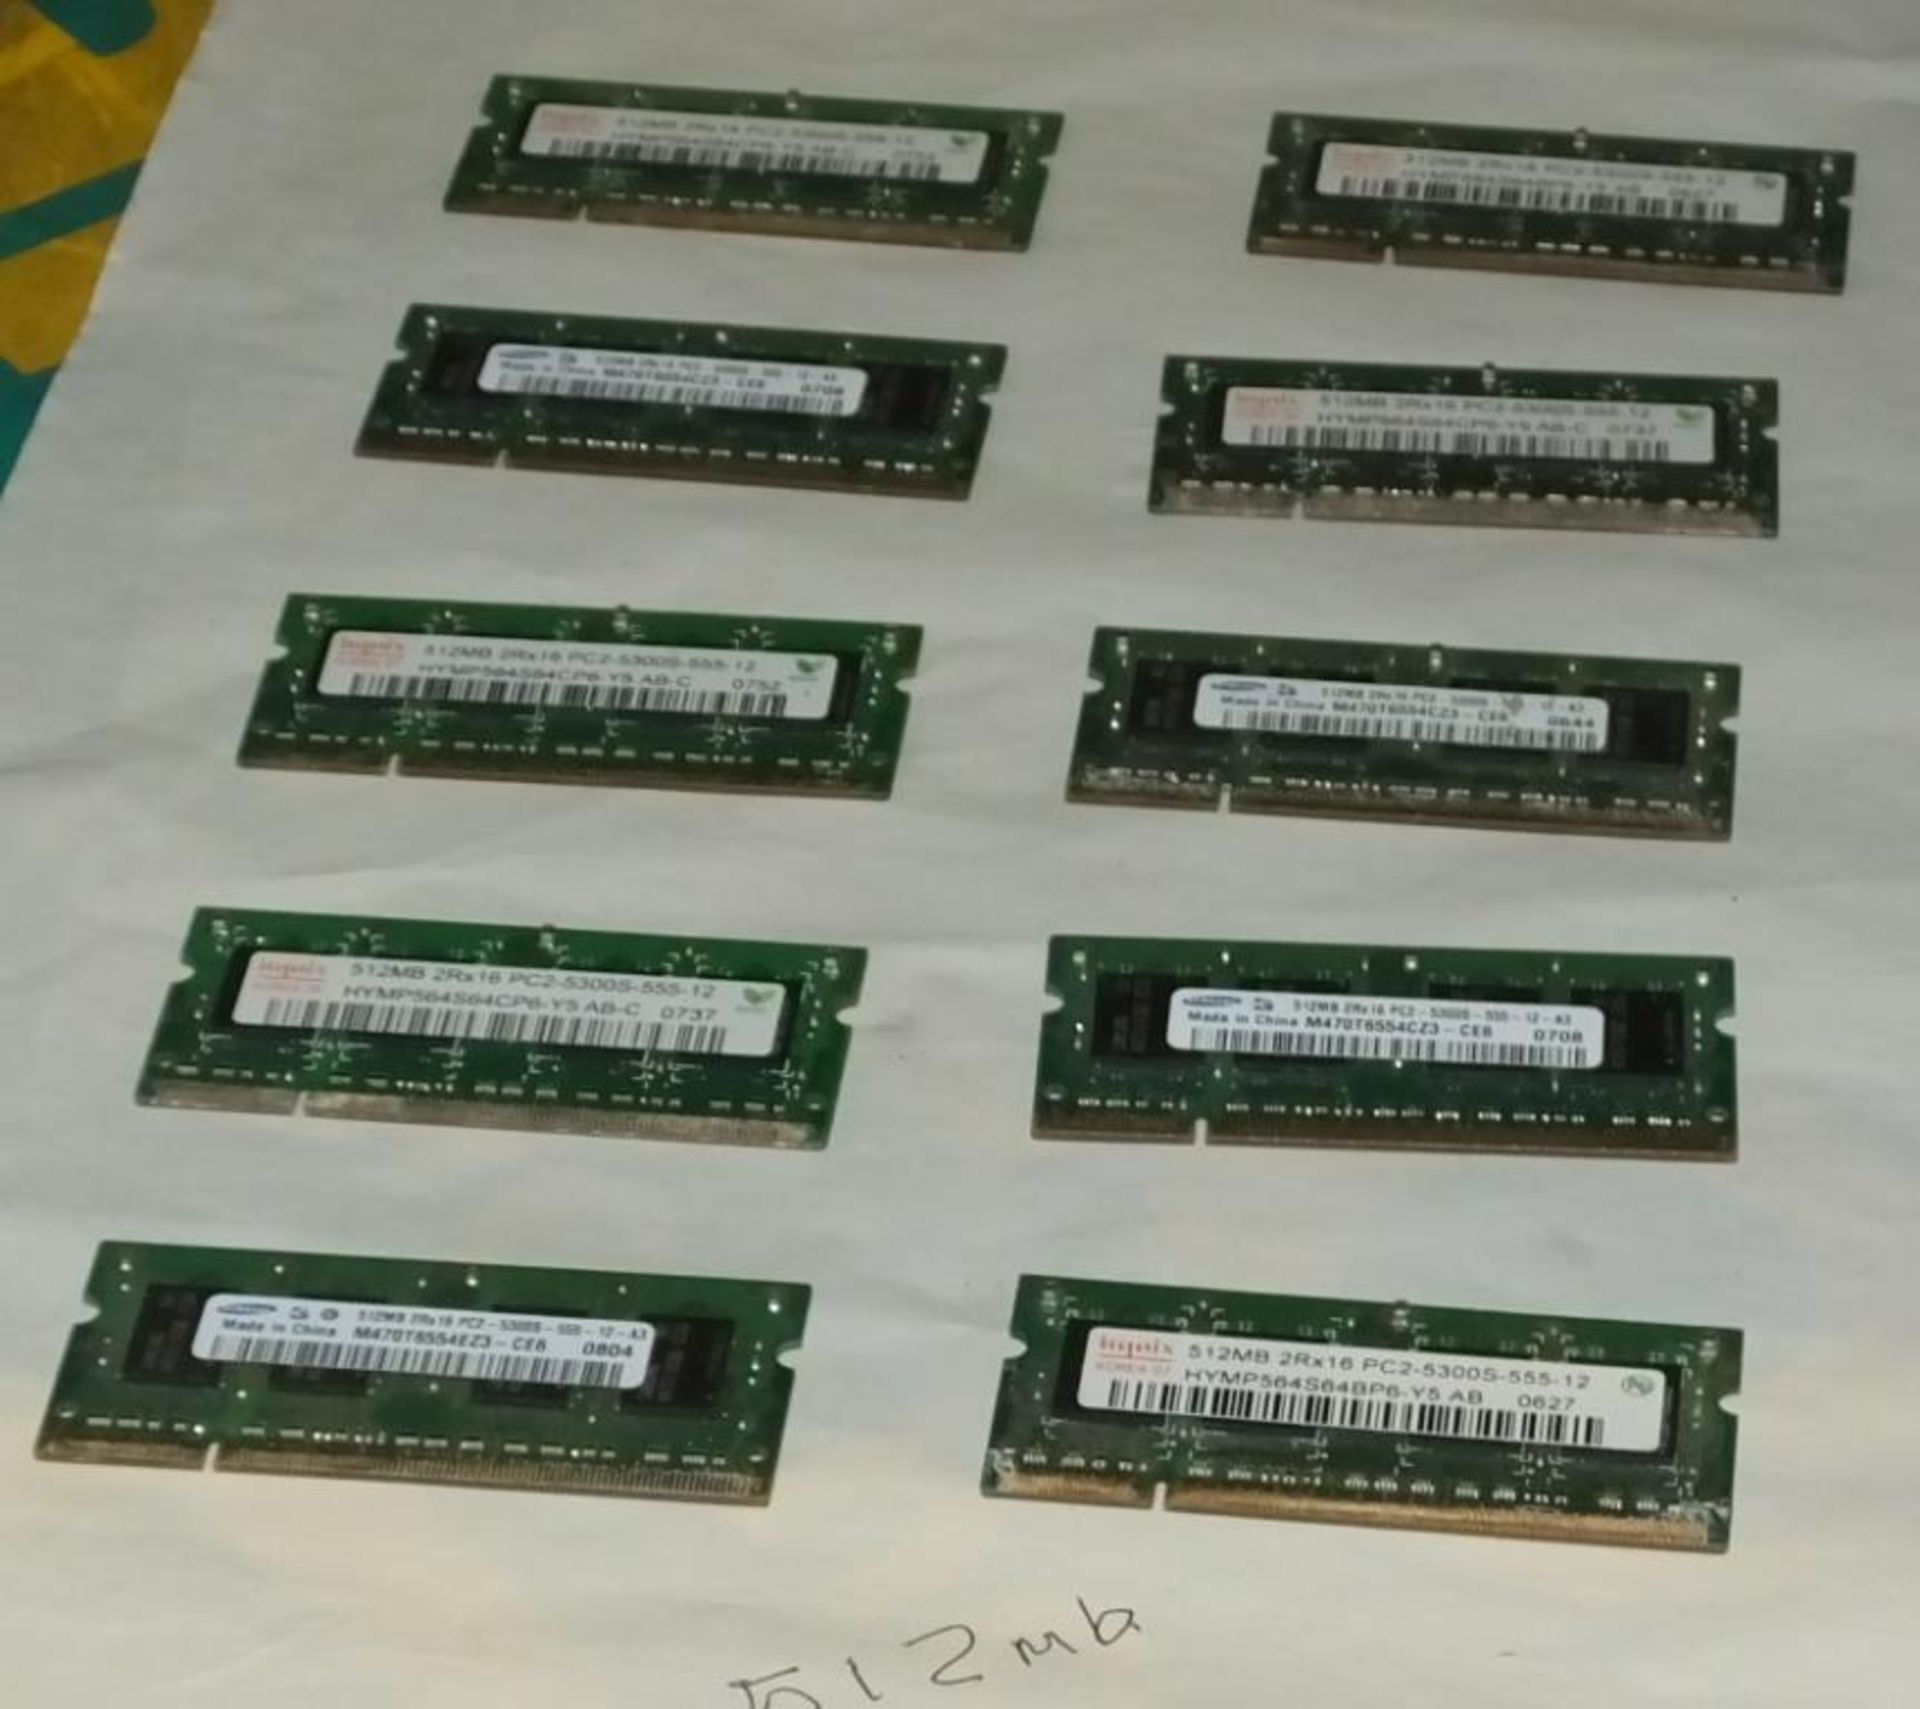 10x 512MB Memory Sticks.